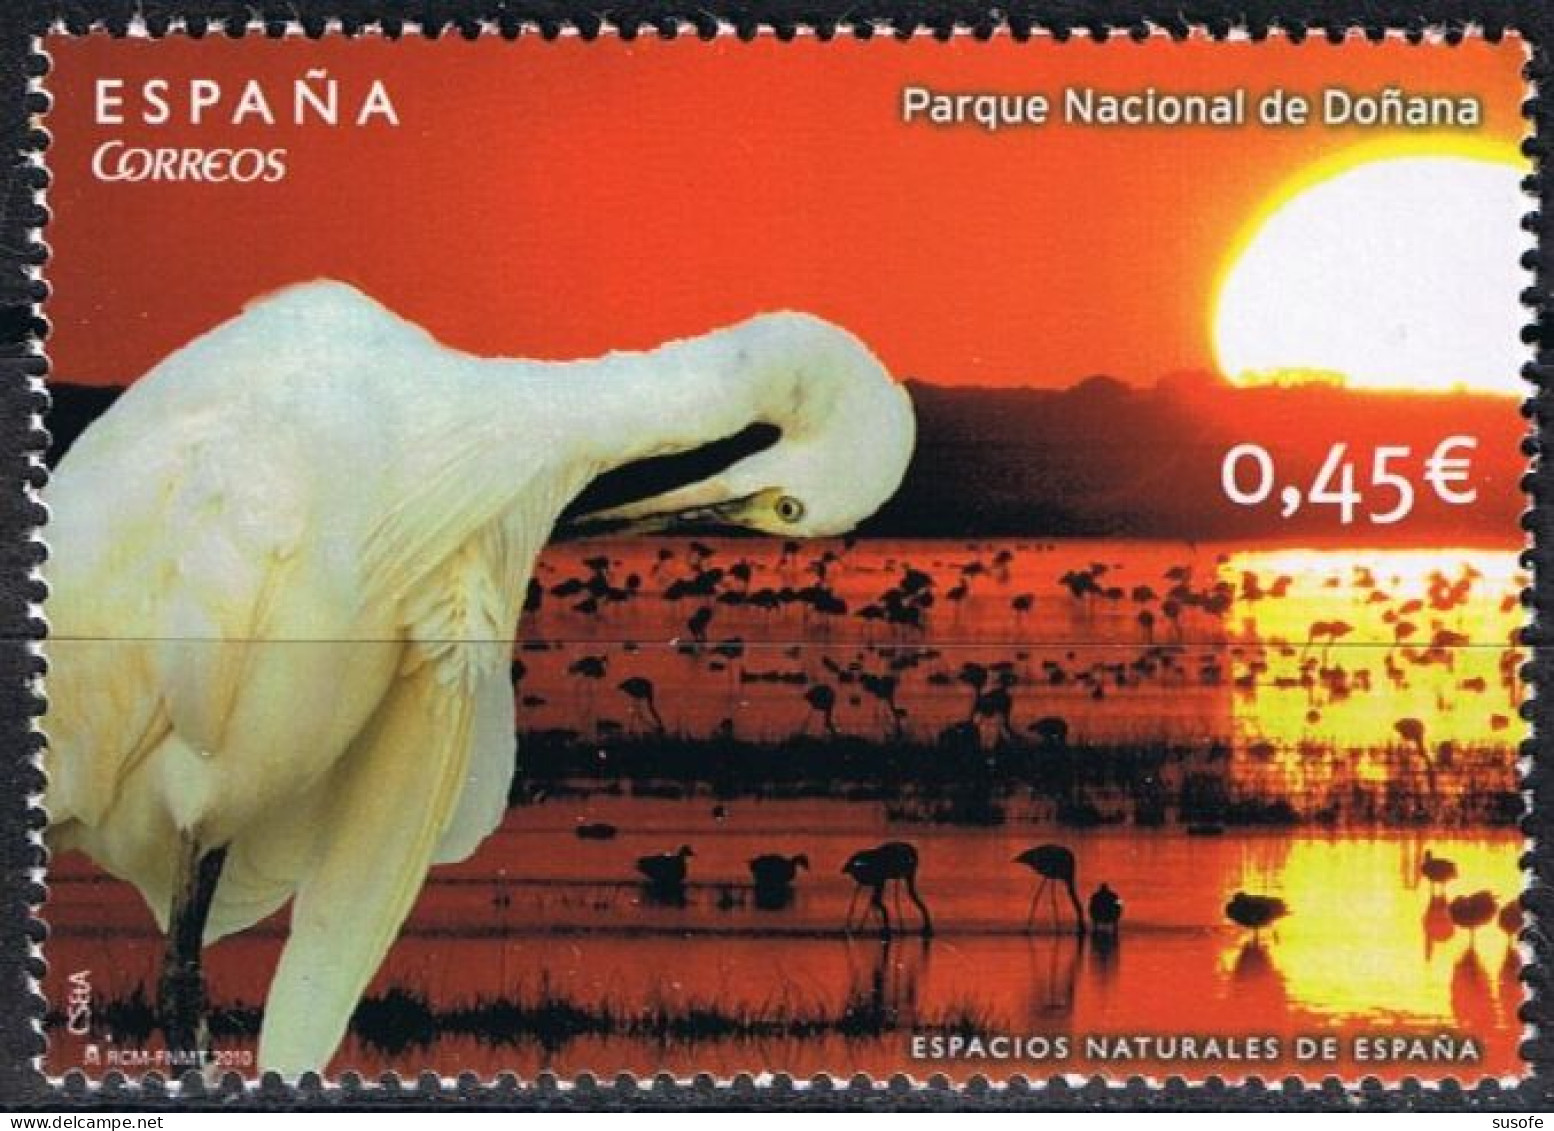 España 2010 Edifil 4568 Sello ** Espacios Naturales Parque Nacional De Doñana Huelva Garza (Ardea Alba) Patrimonio Mundi - Nuevos